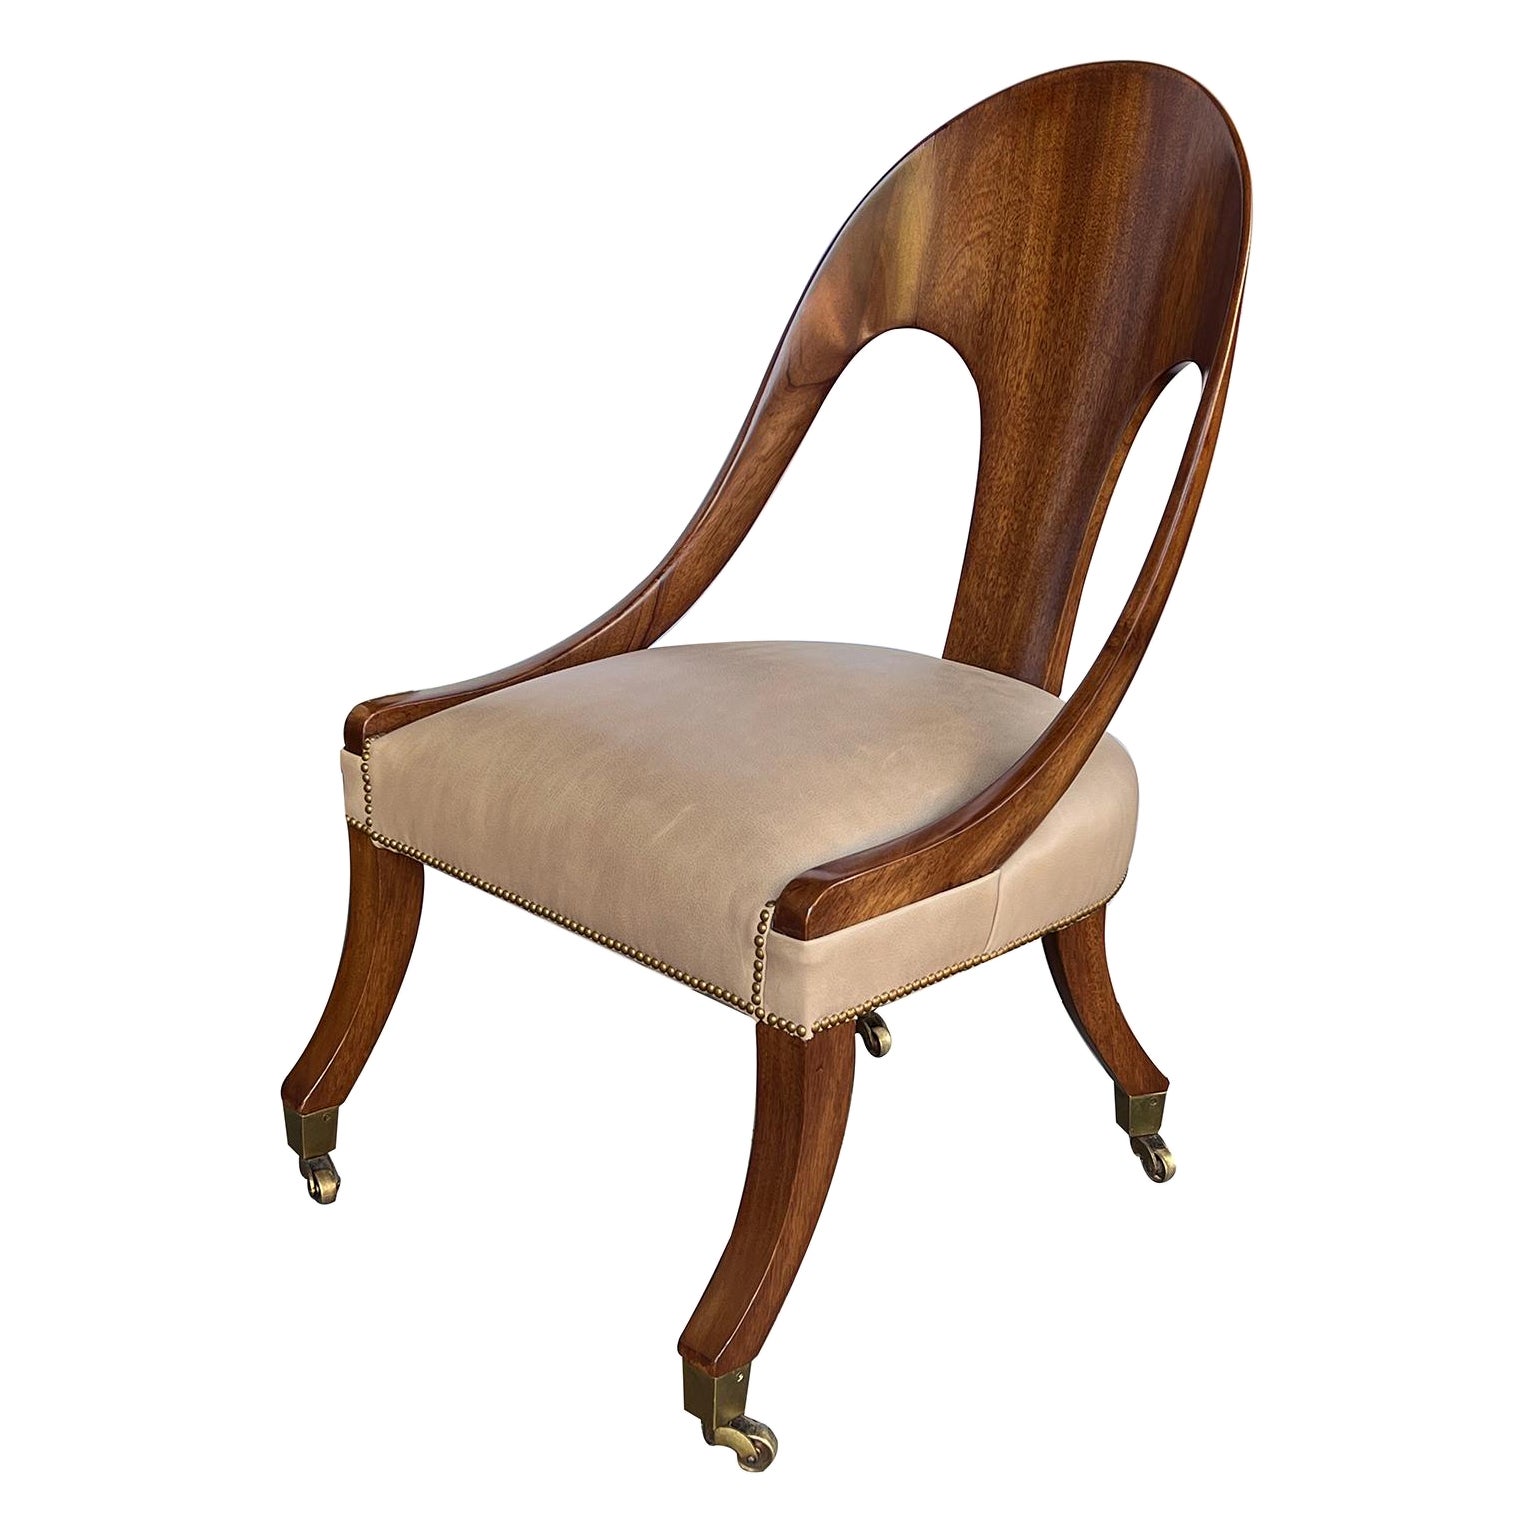 Shapely English Regency Style Solid Mahogany Spoonback Chair